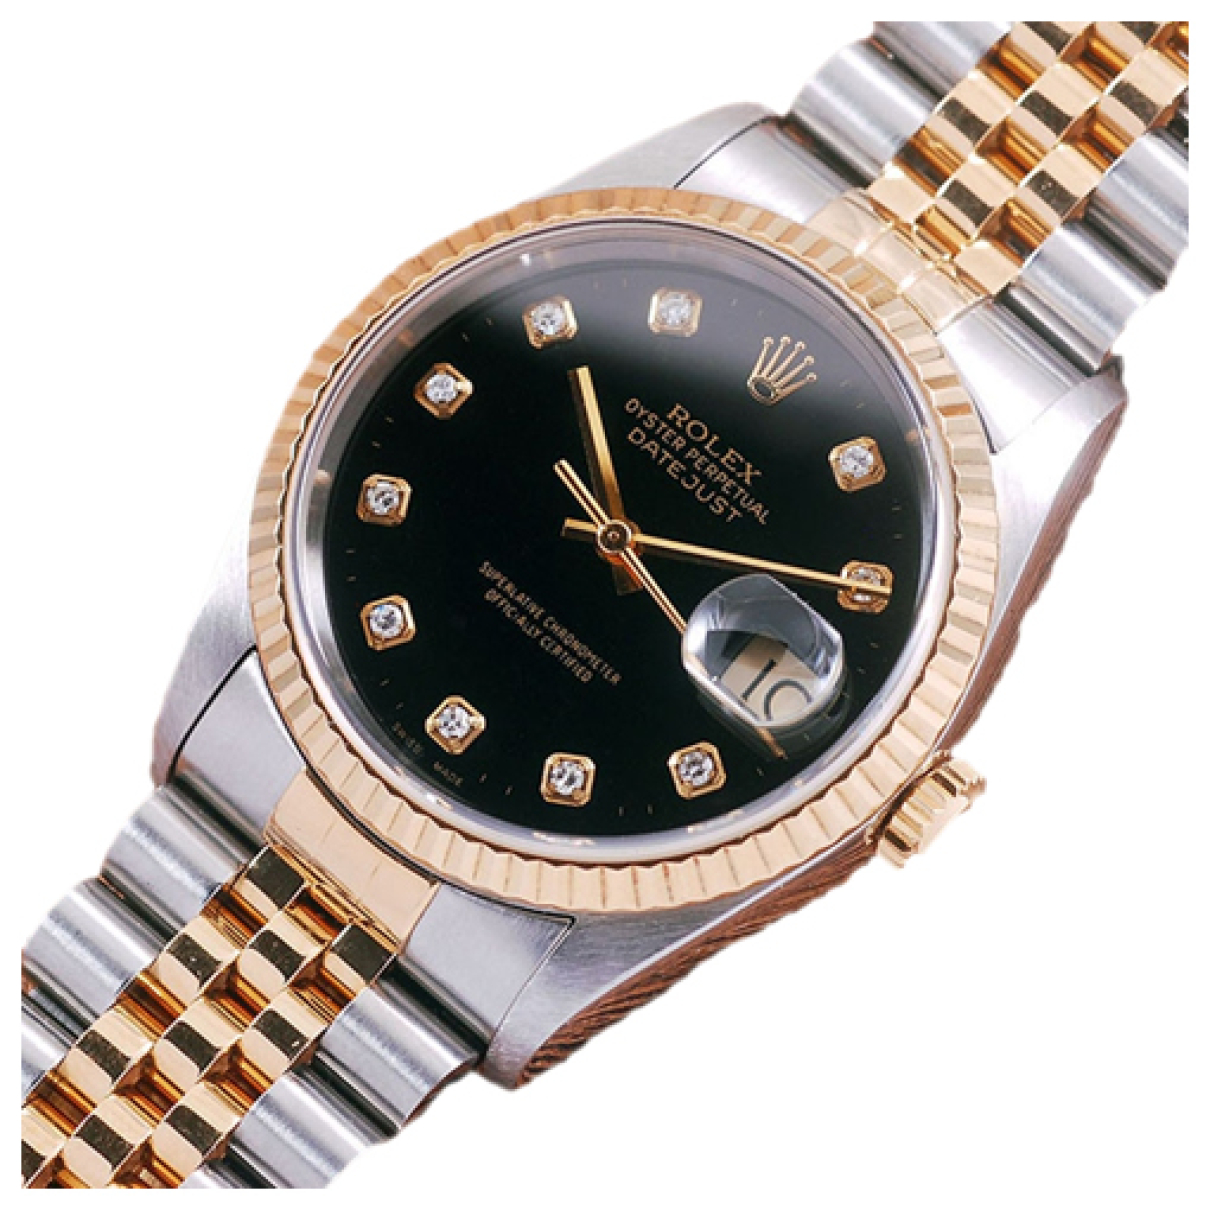 Image of Rolex Datejust 36mm watch